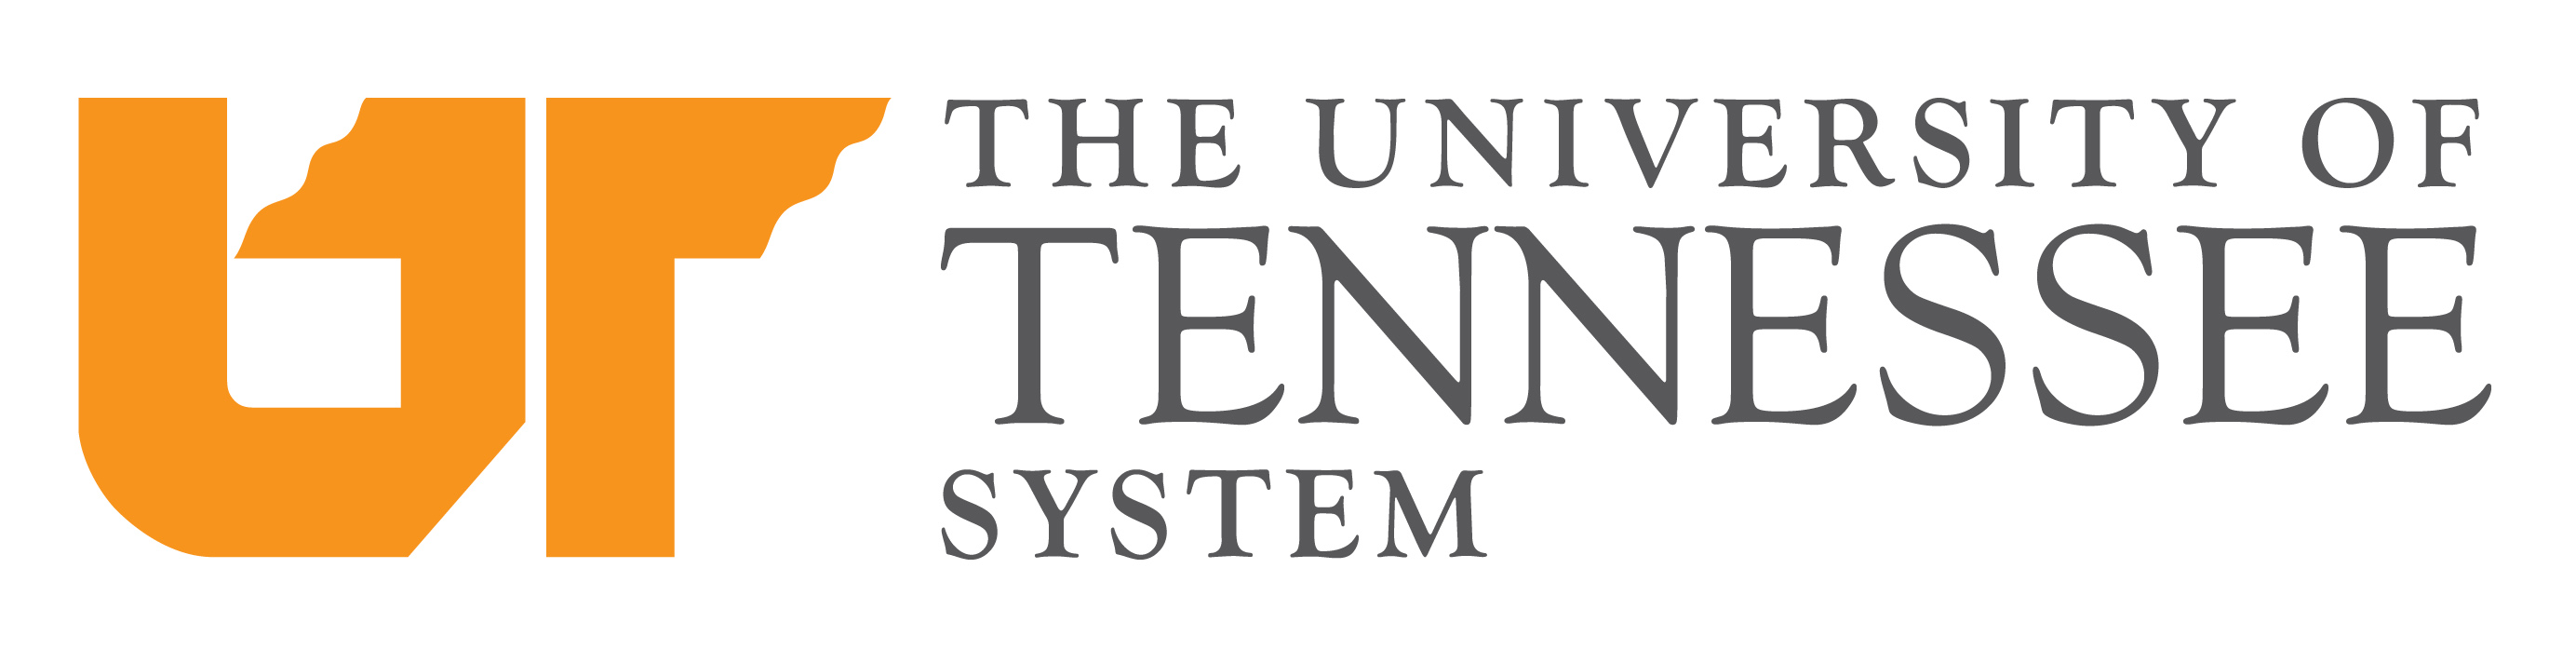 UT System Primary.jpg